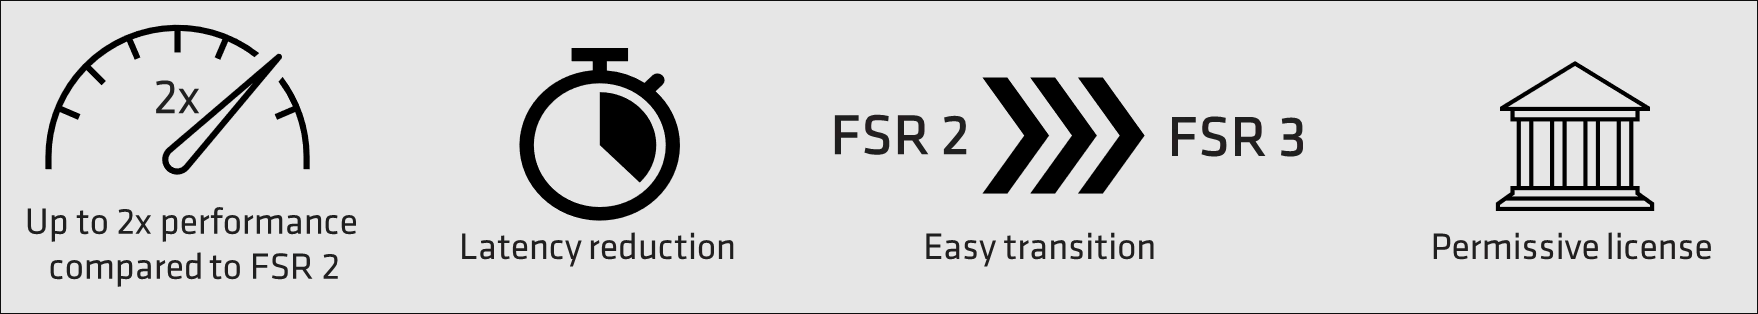 AMD FSR 3 Feature.PNG